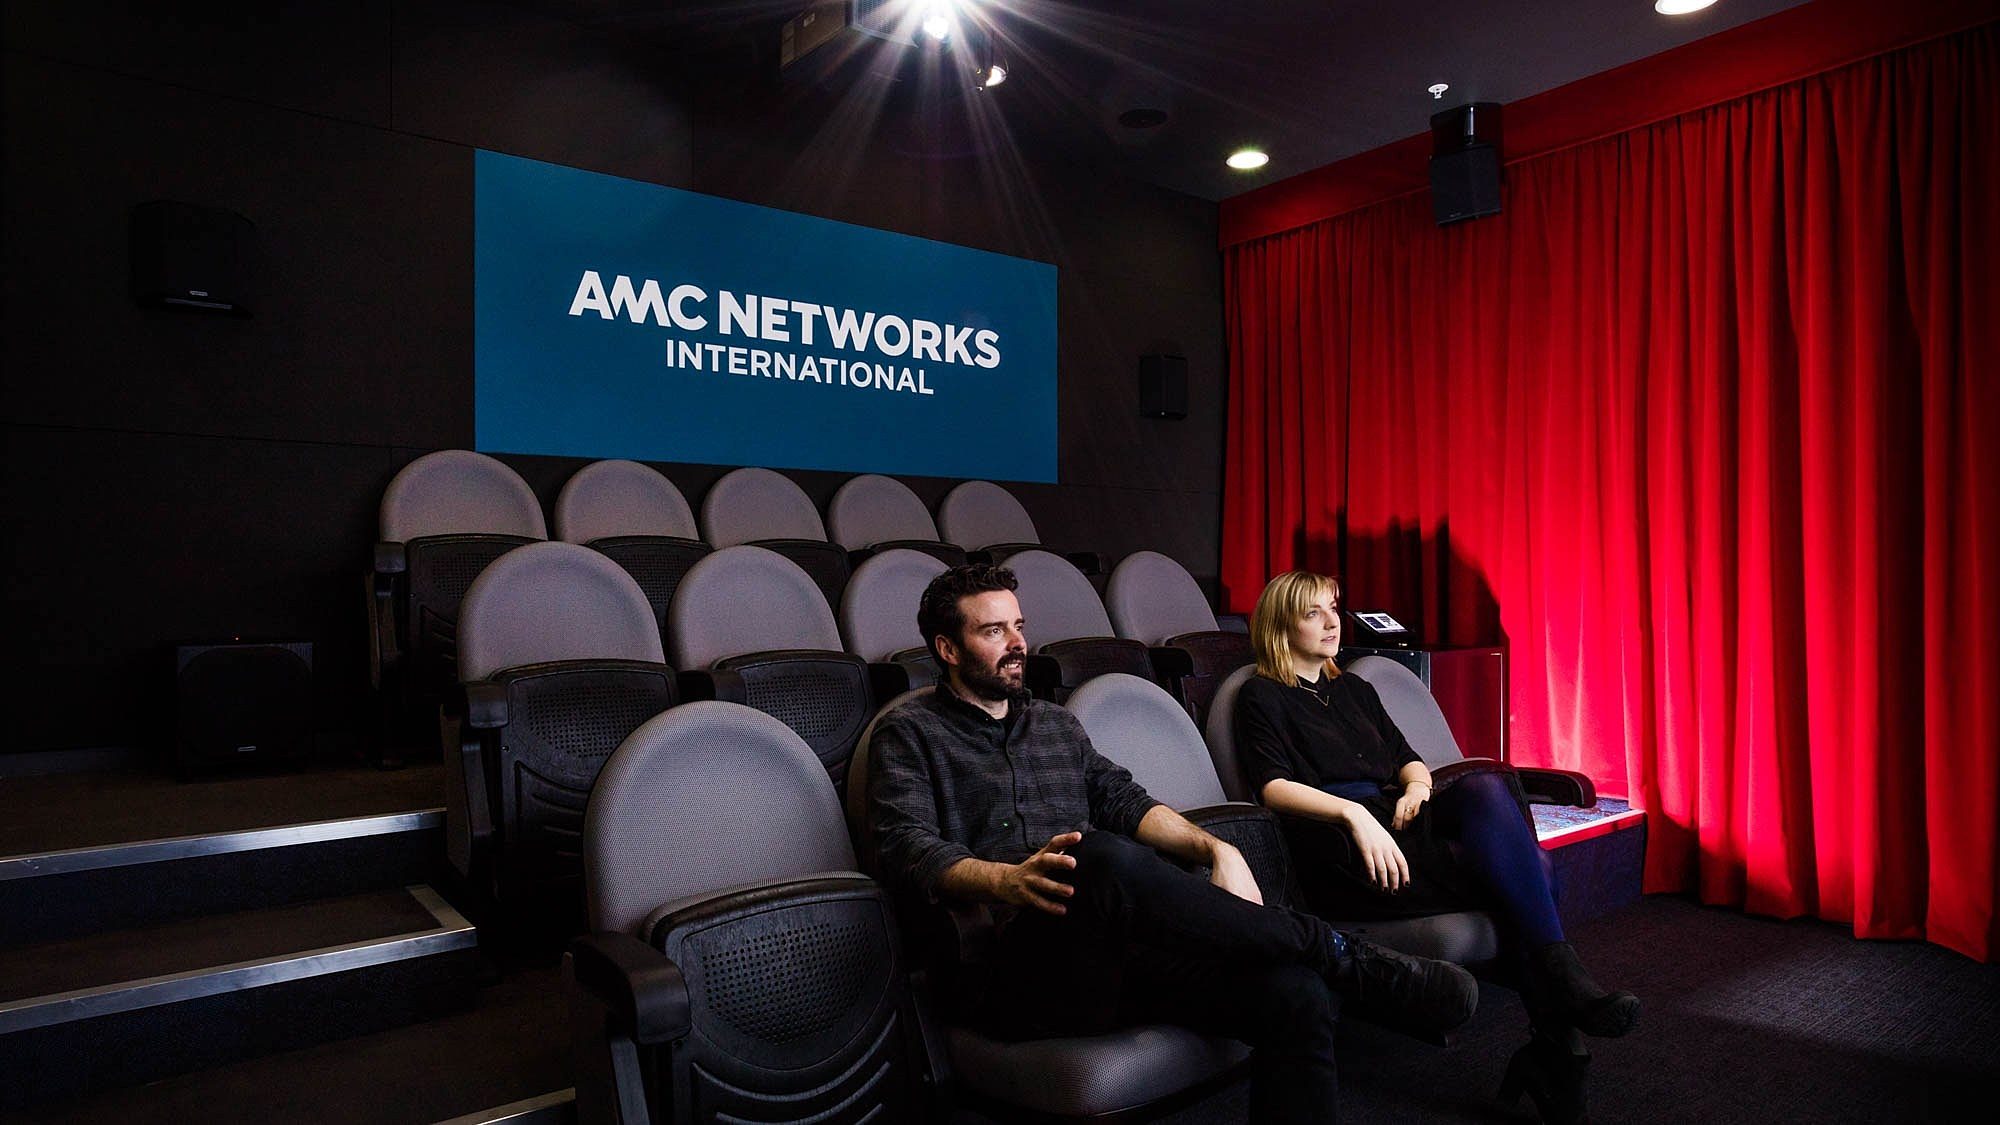 AMC Networks office cinema